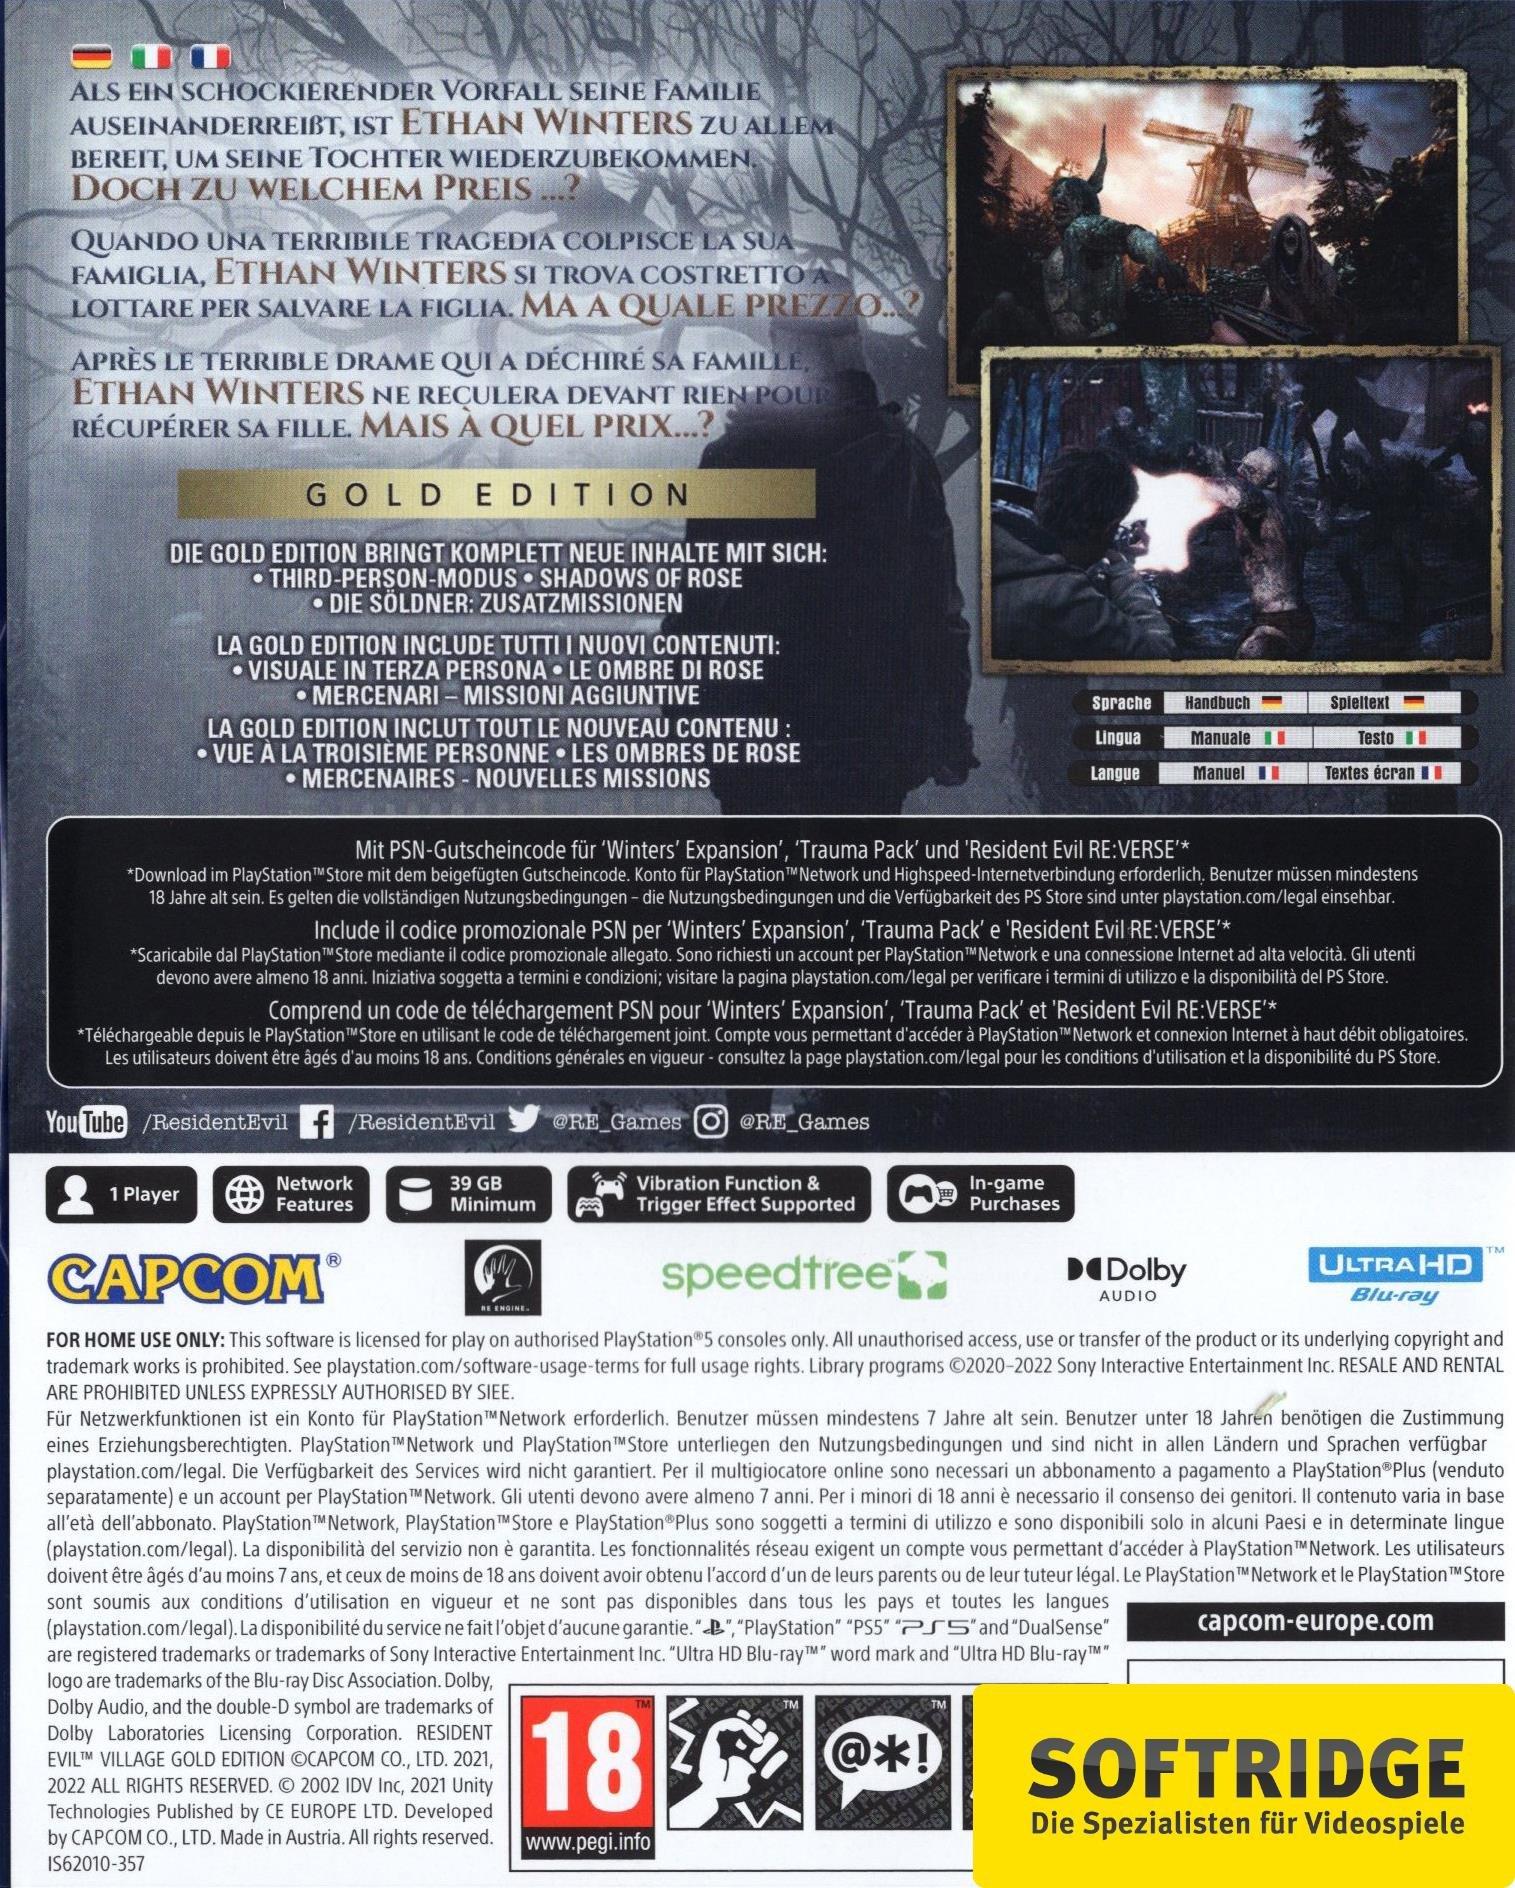 CAPCOM  Resident Evil 8 Village - Gold Edition 